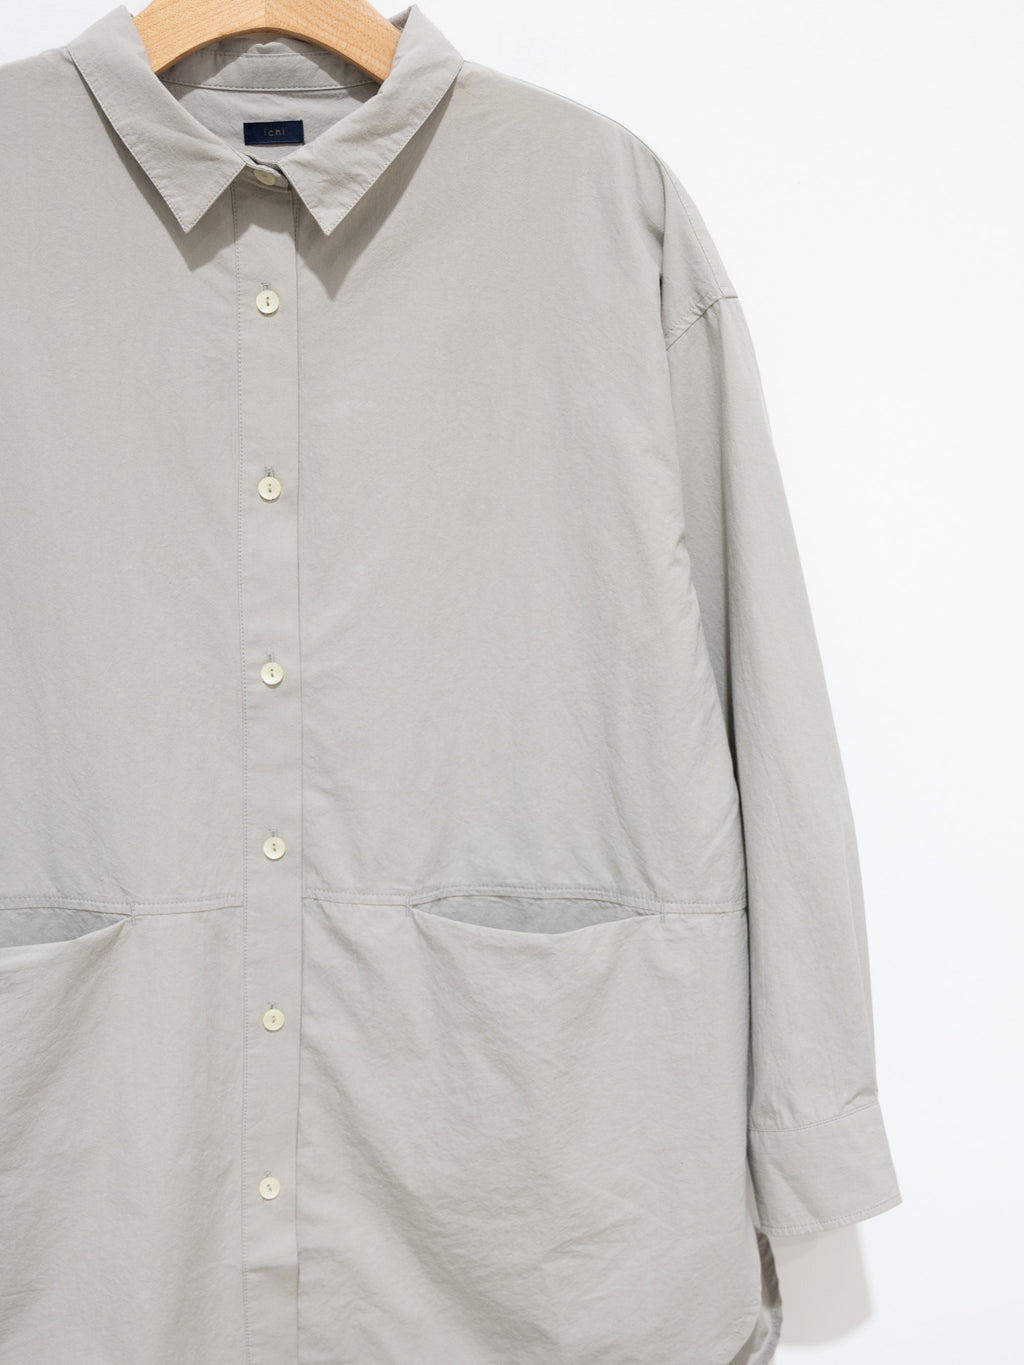 Namu Shop - ICHI Pocket Shirt - Gray